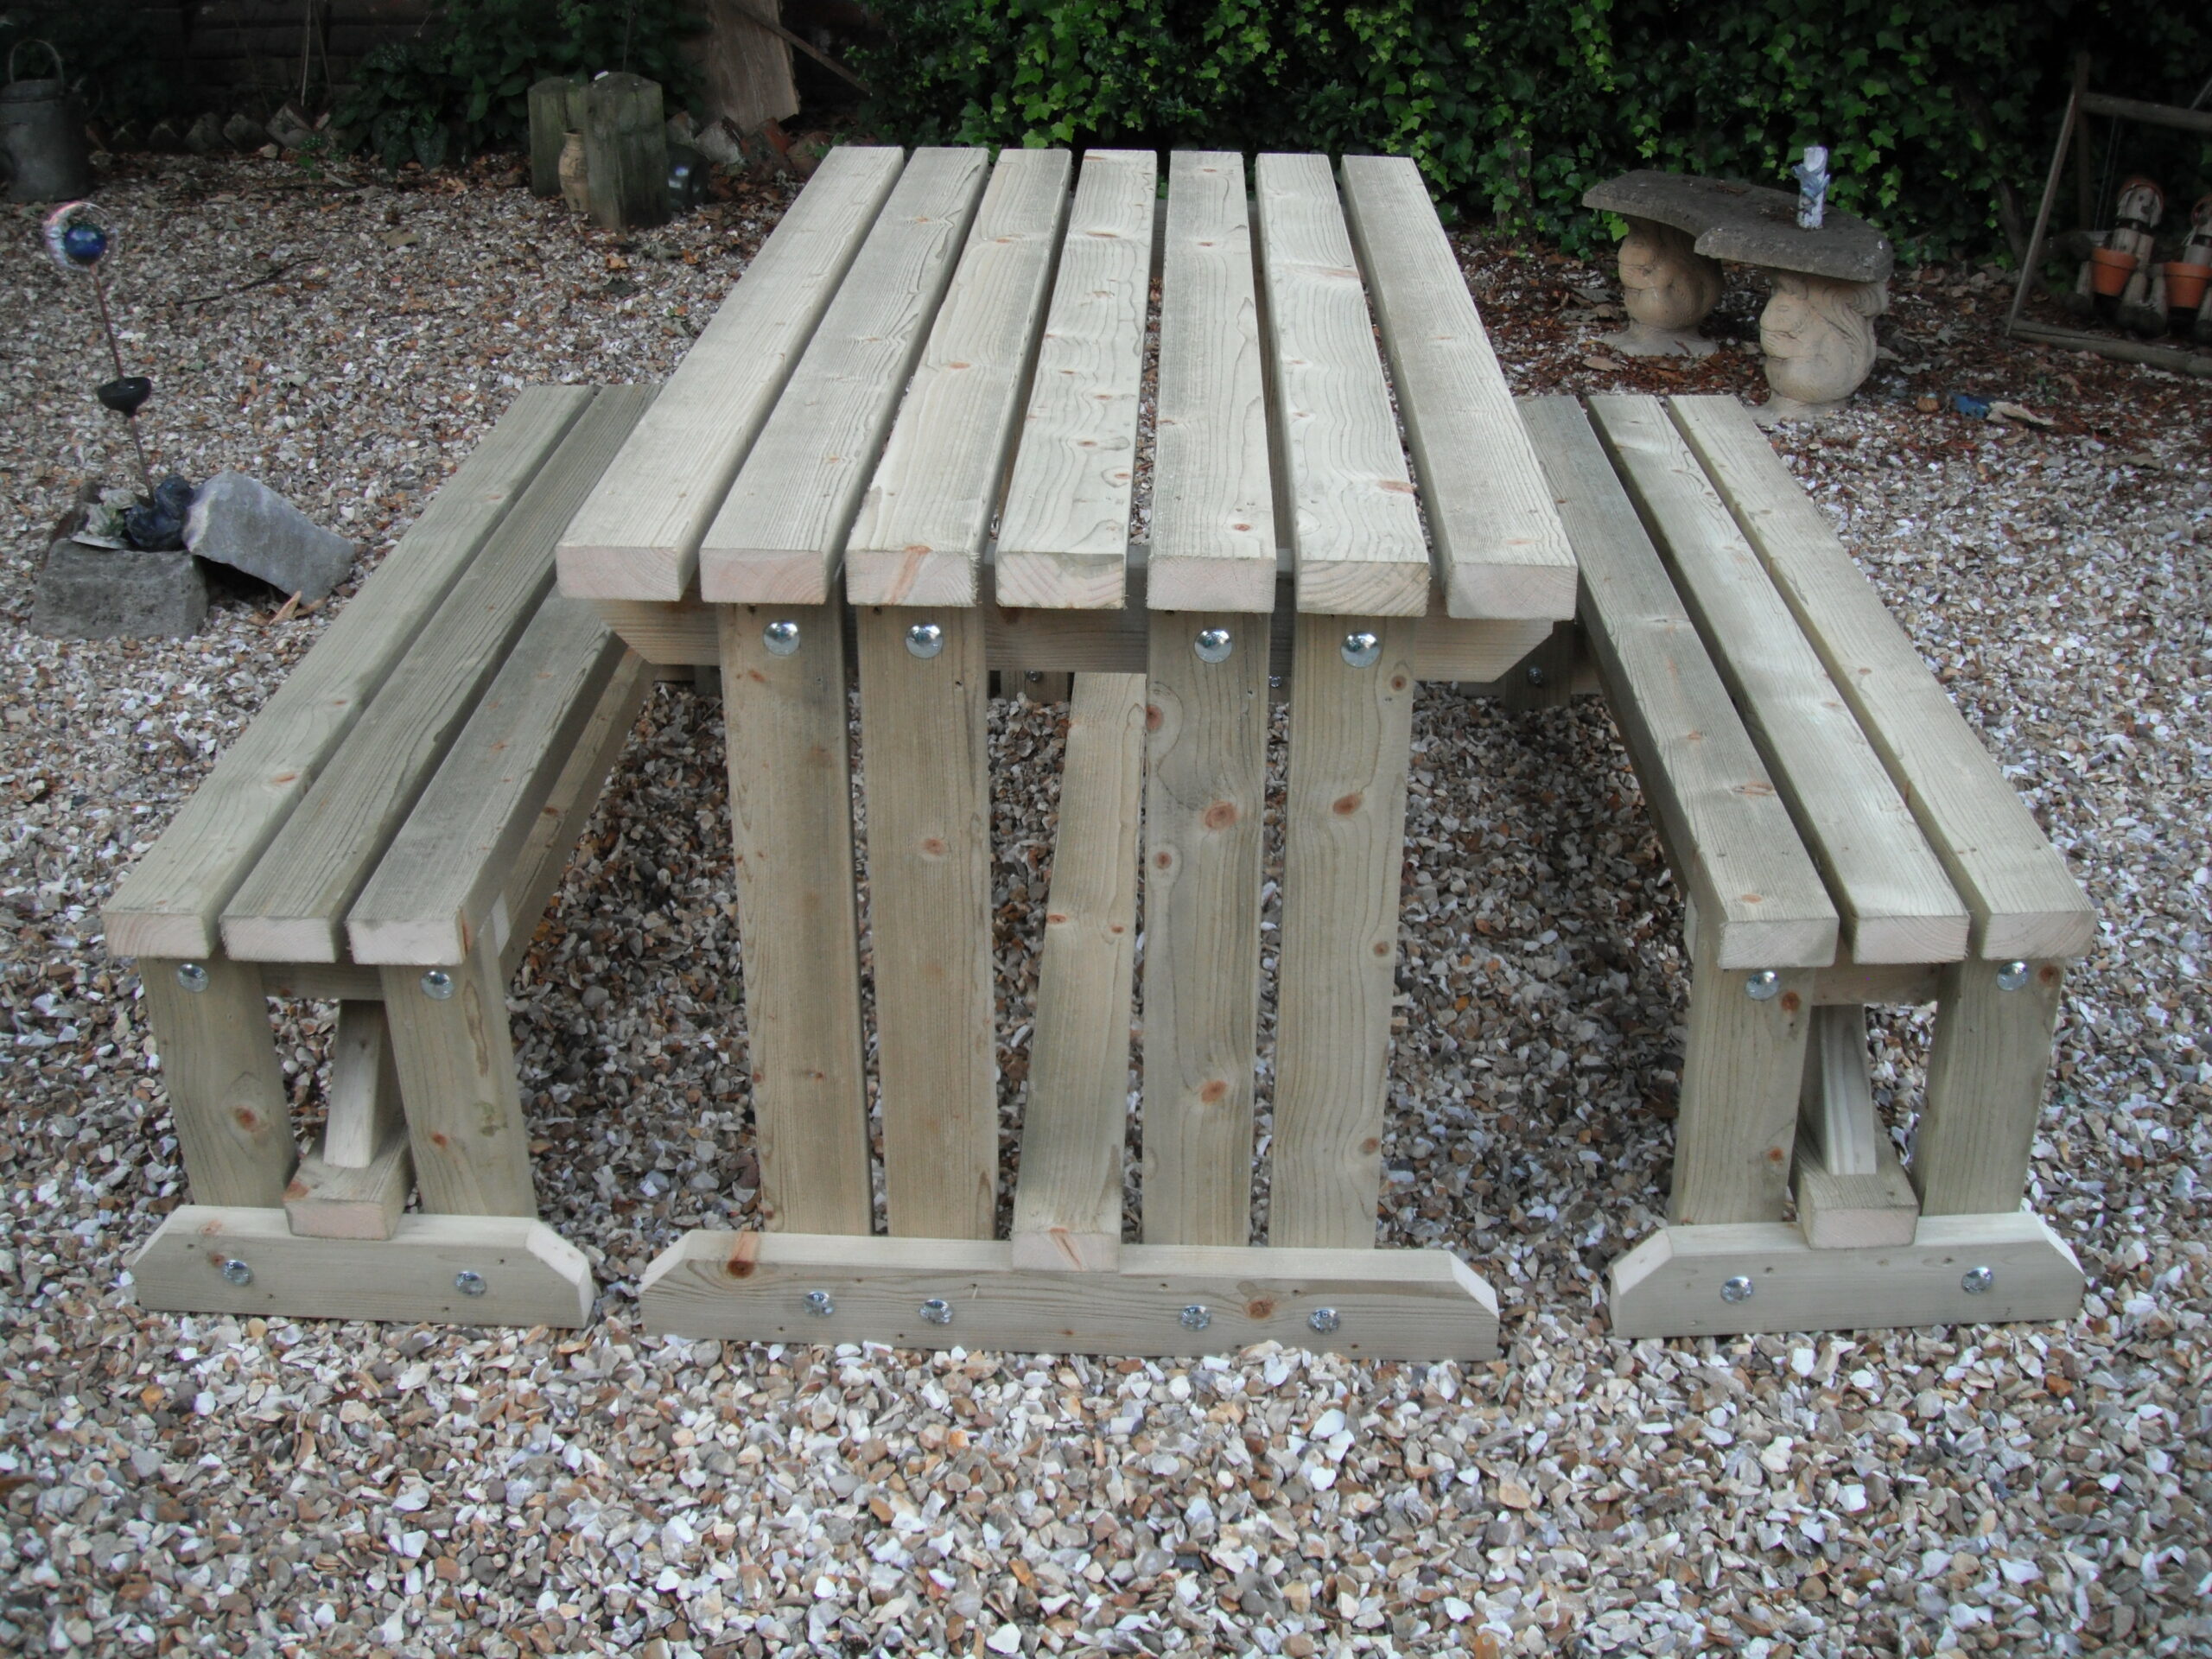 Wooden walk in picnic bench in garden on gravel